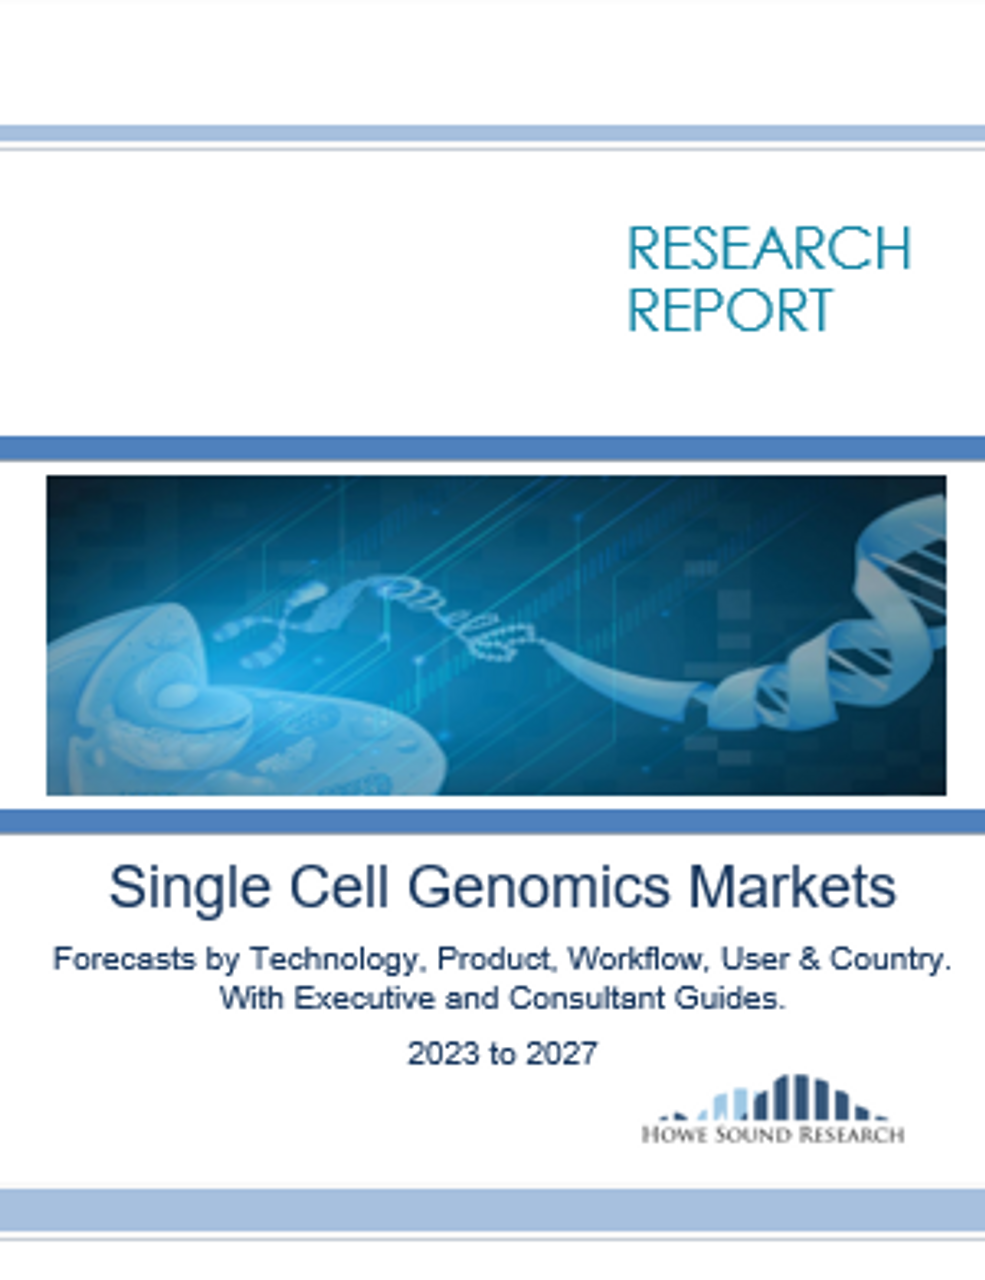 Single Cell Genomics (SCG) Markets 2023 to 2027